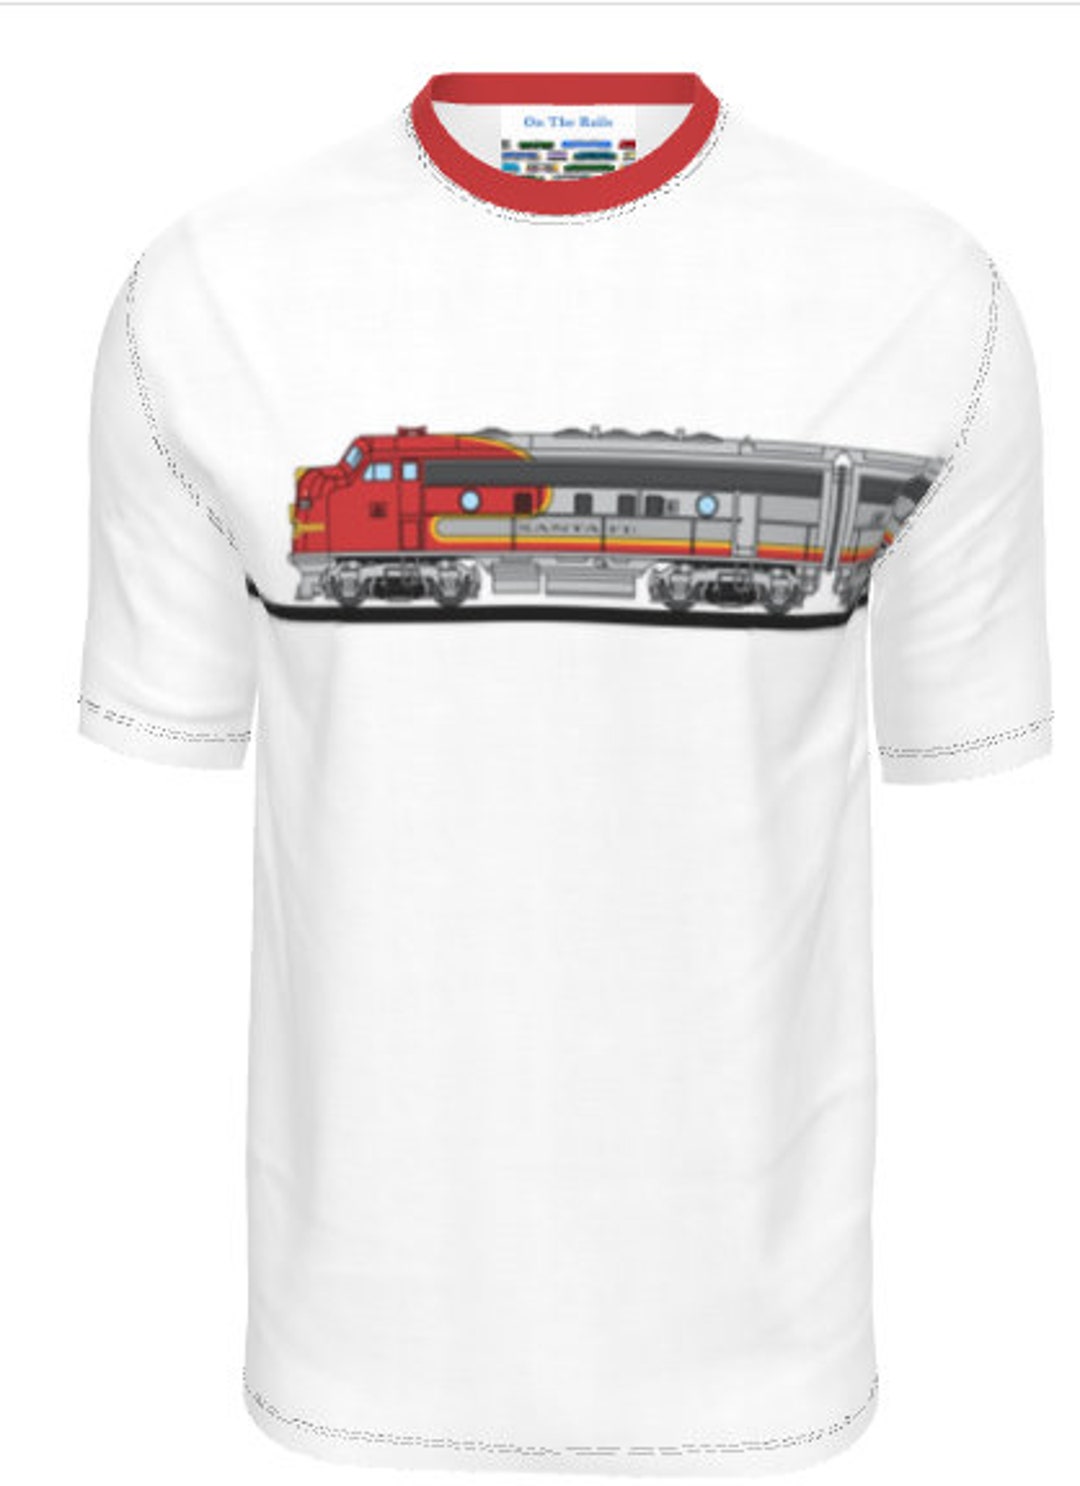 EMD F3 & F7 Diesel Locomotives Santa Fe Union Pacific Canadian - Etsy UK